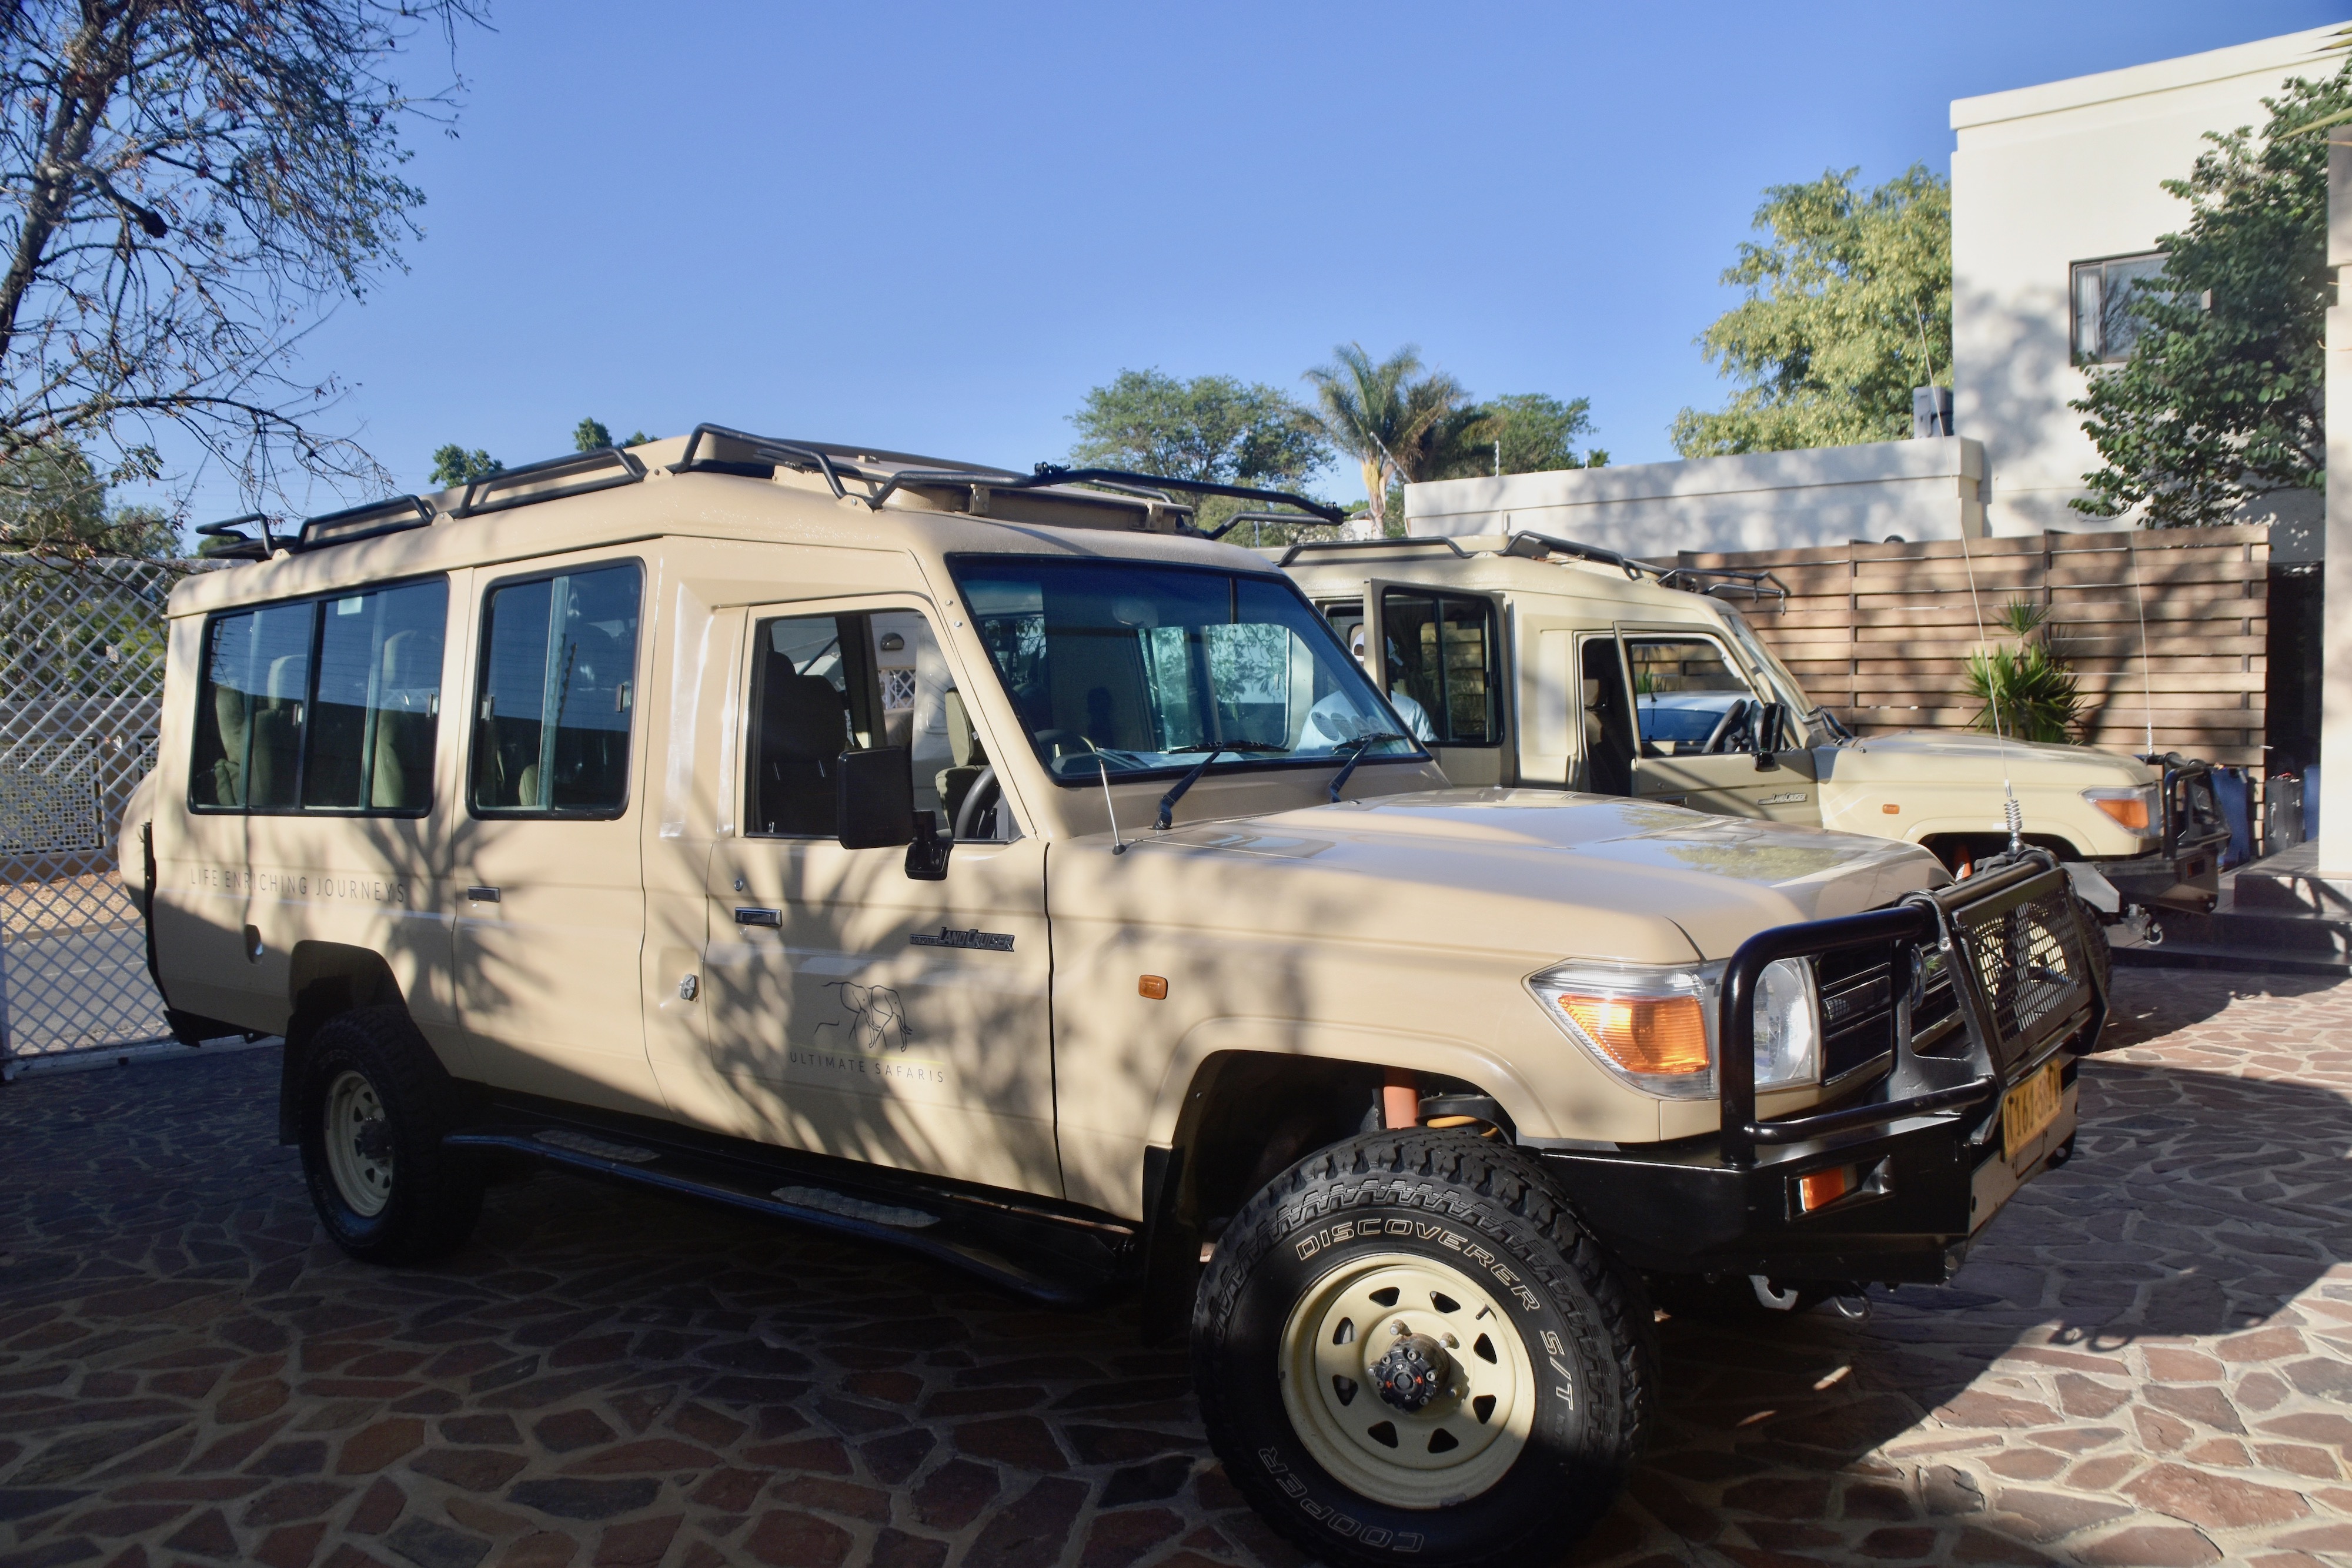 Our Ultimate Safaris Vehicles - Exploring Namibia